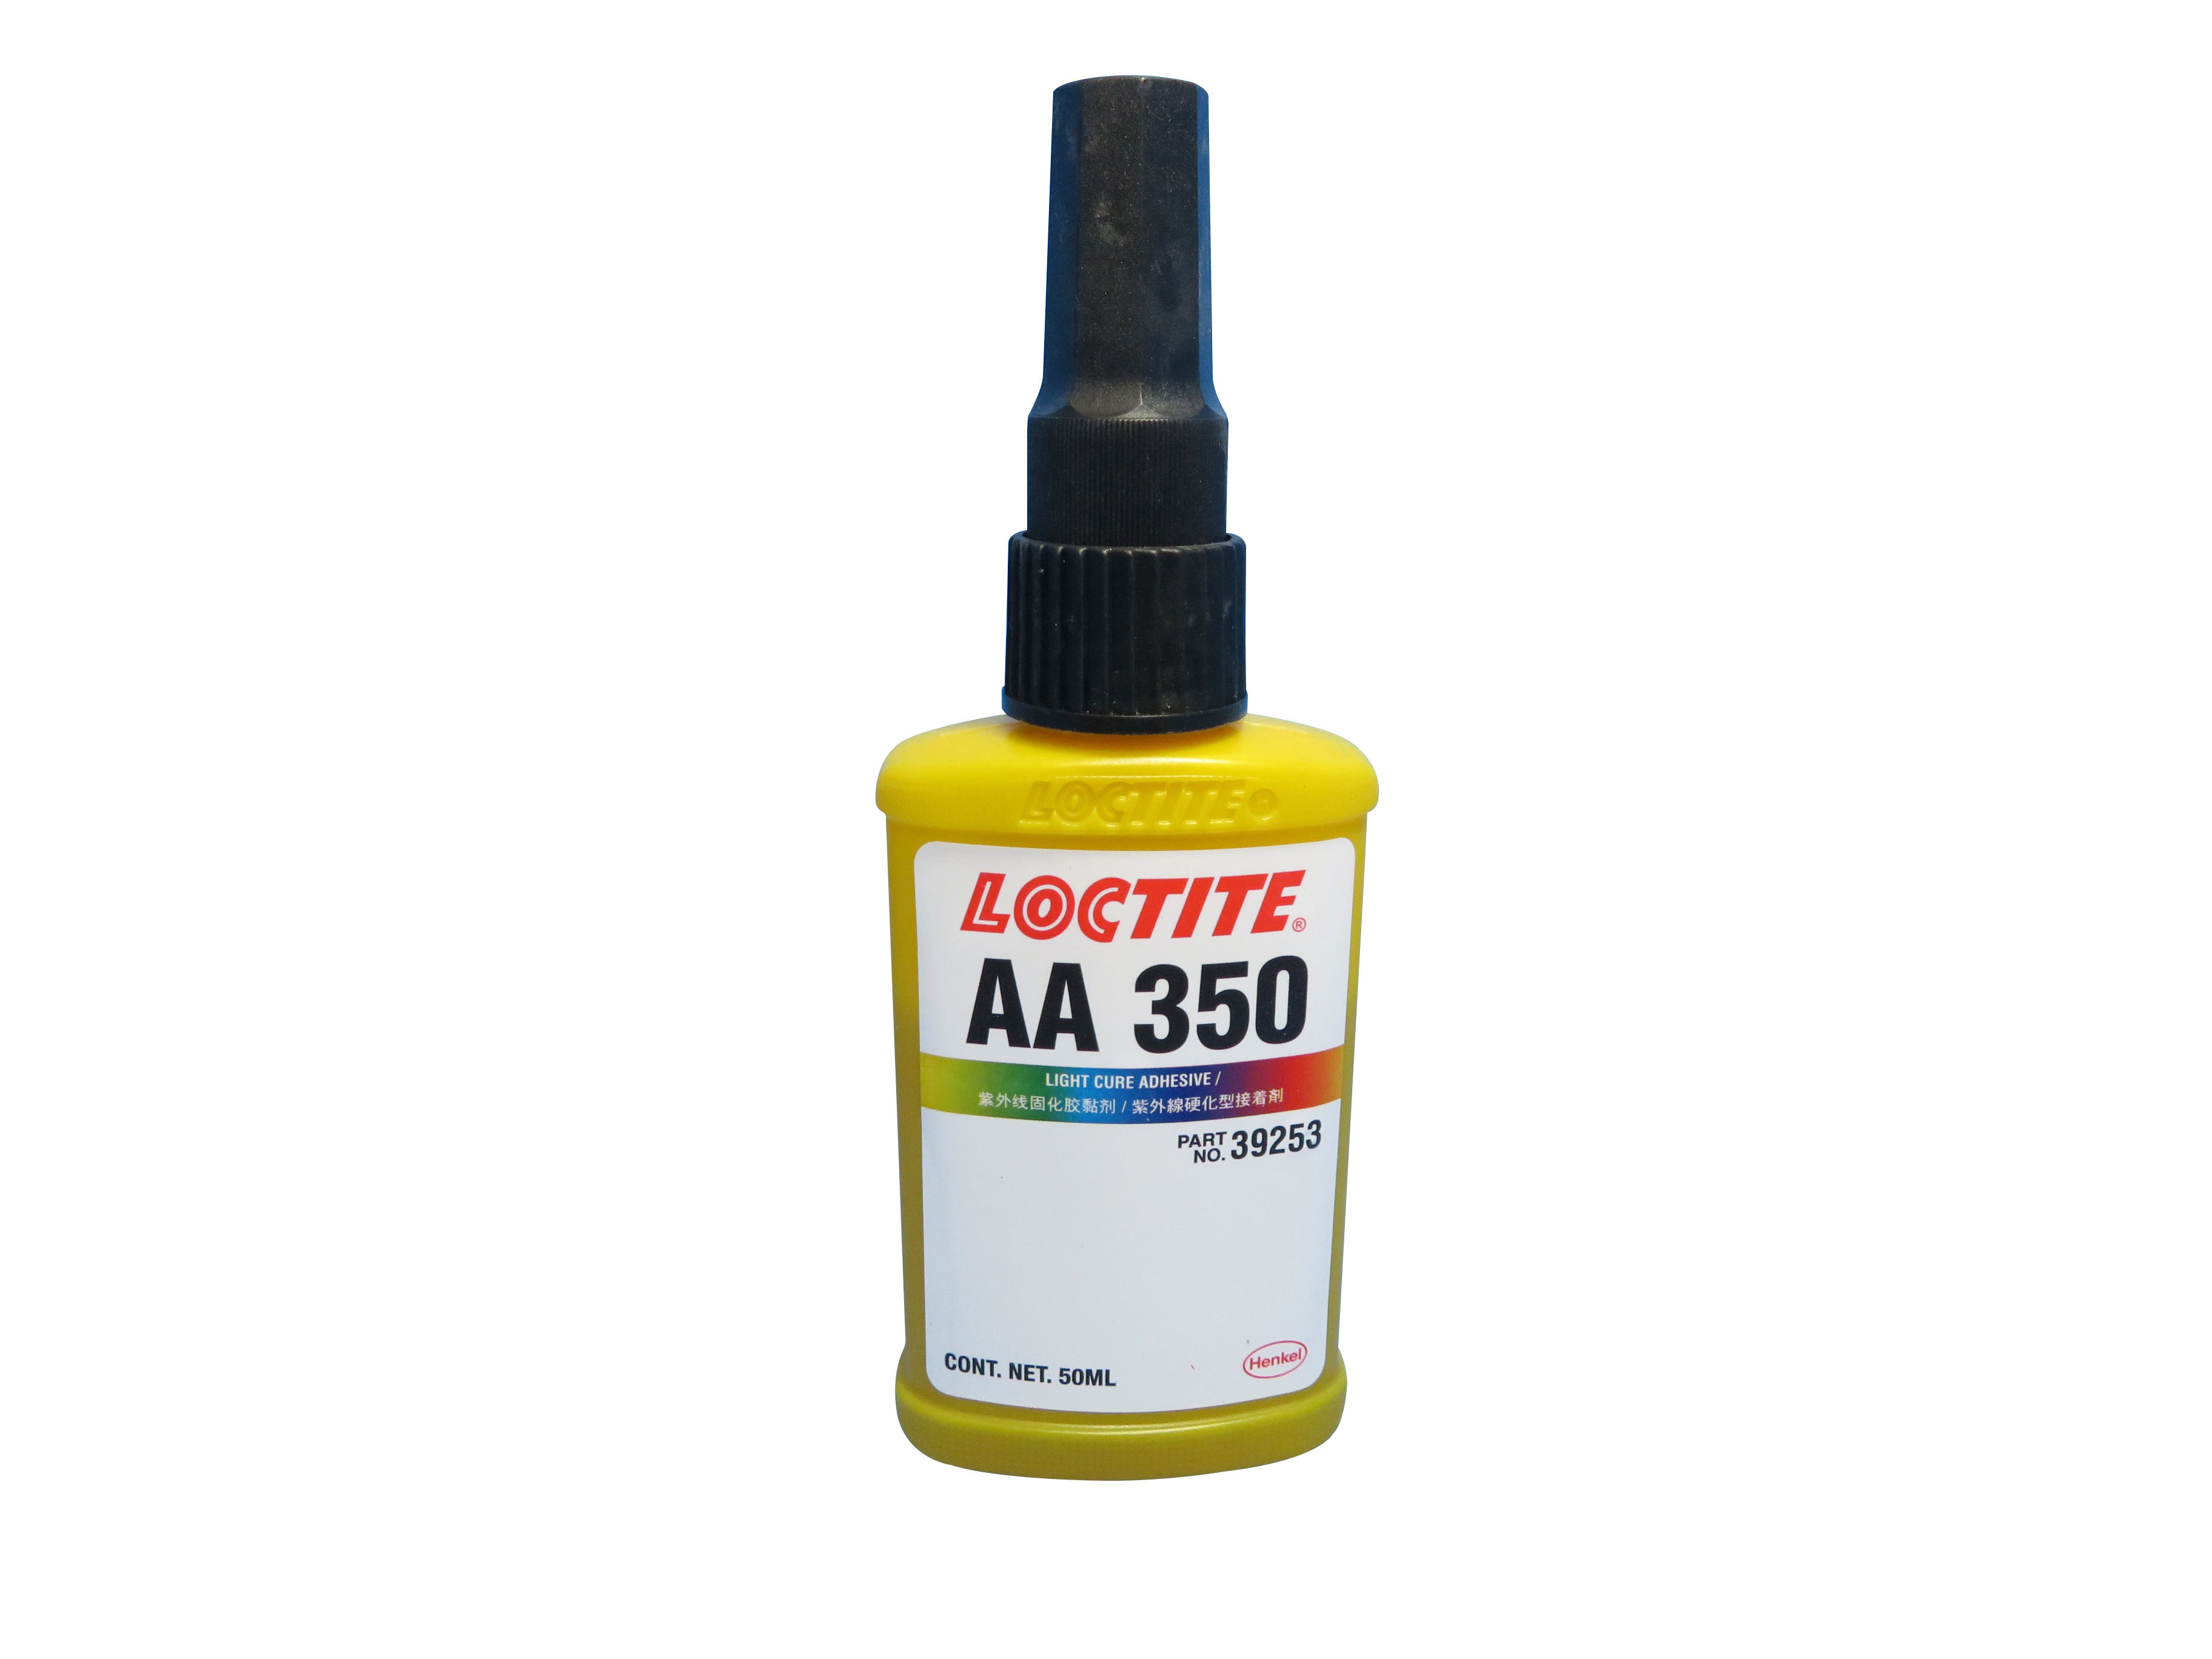 Loctite Ultraviolet Light Curing Adhesive, Medium Adhesion Type